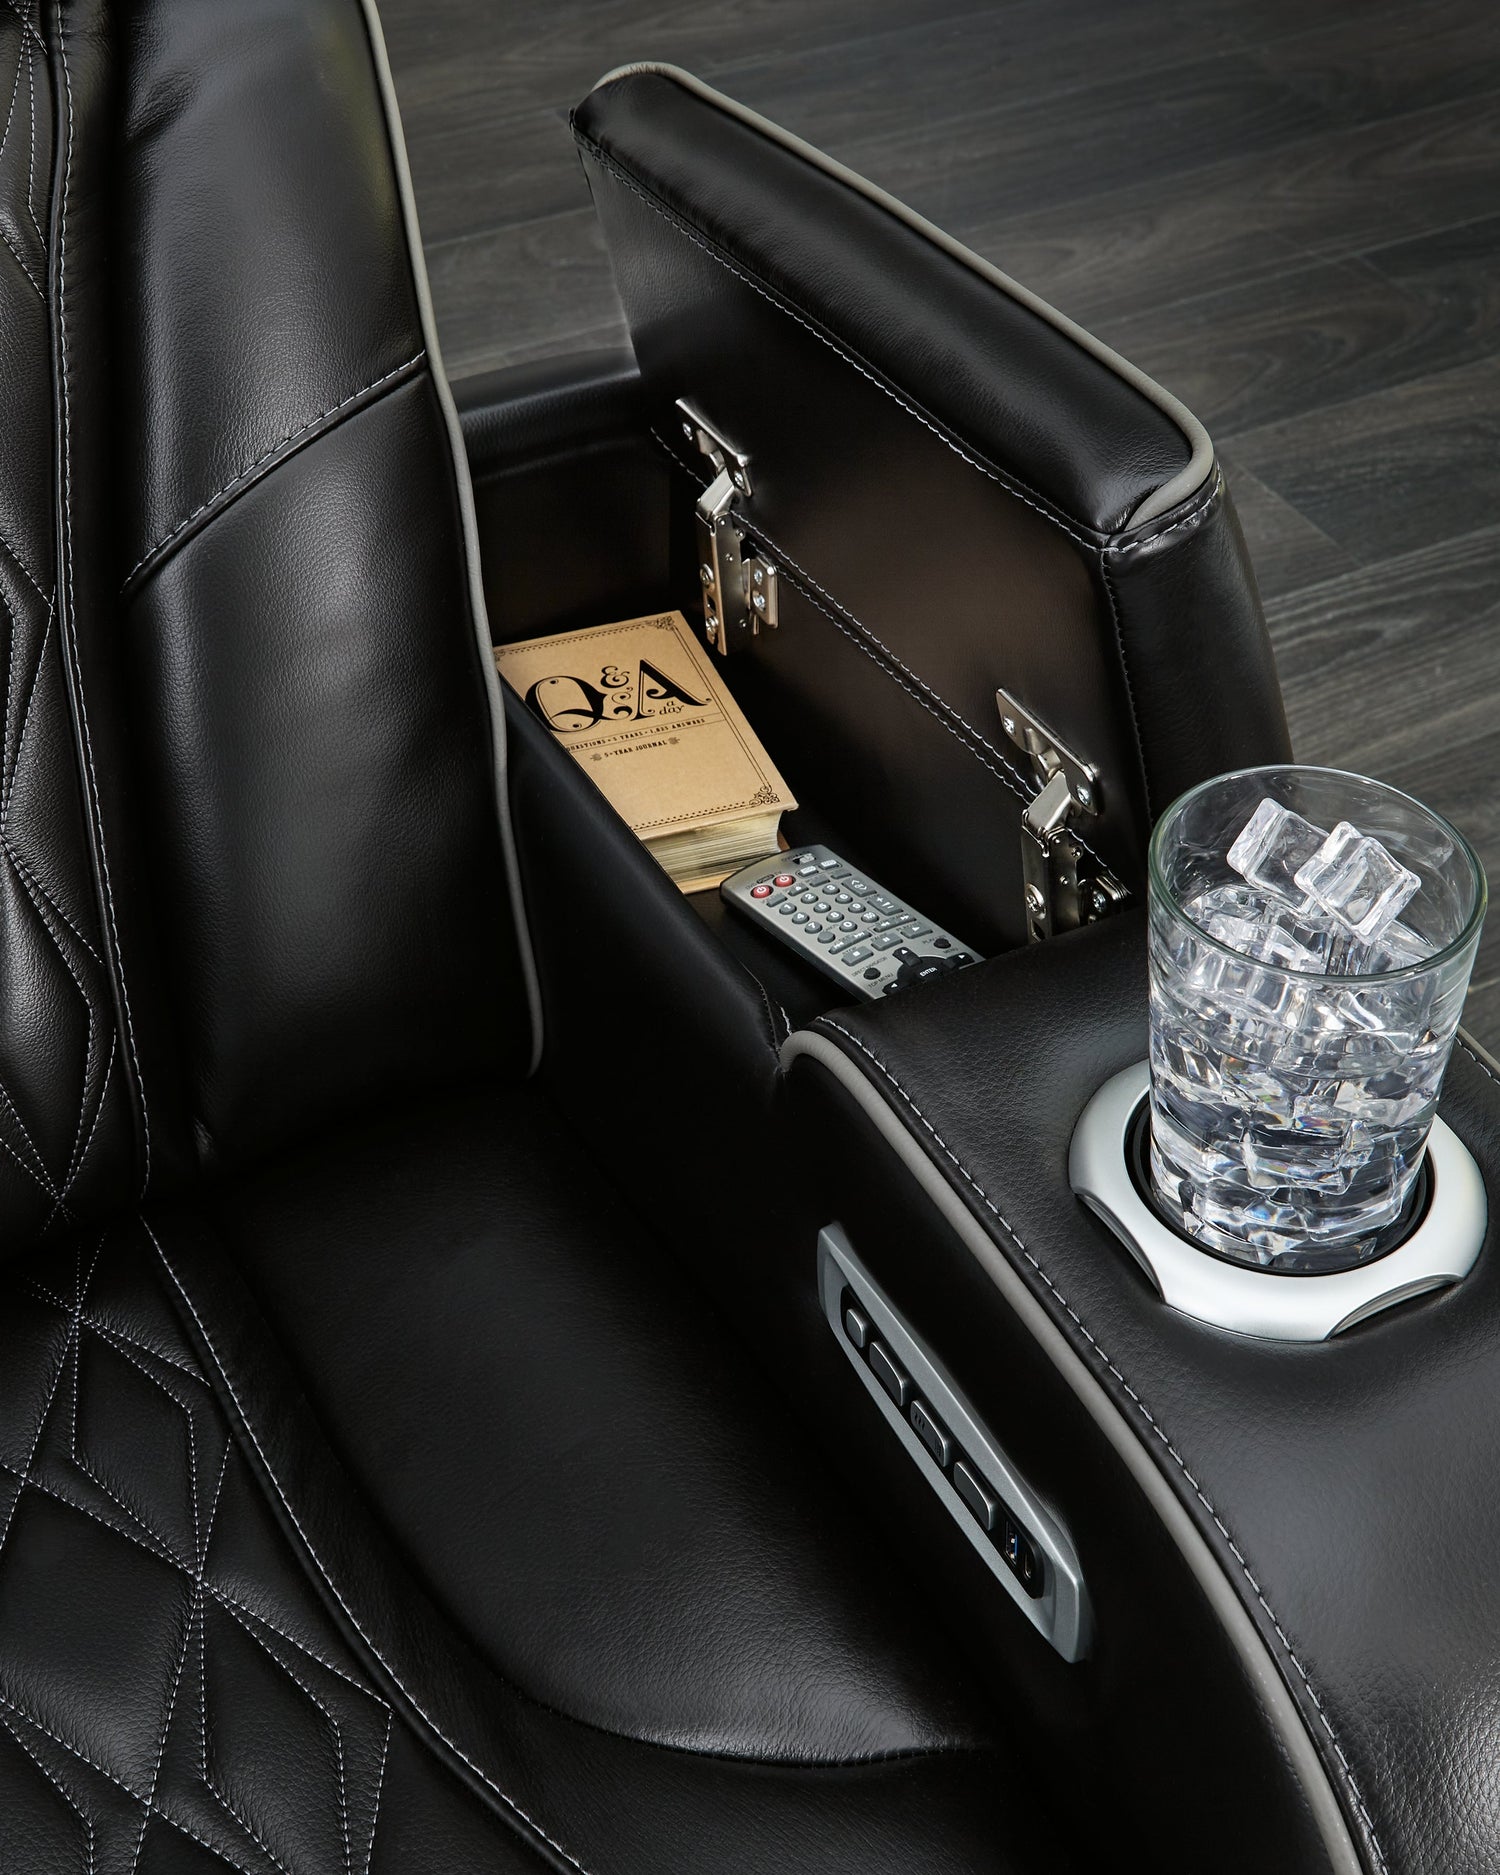 Boyington Black Power Reclining Sofa - U2710615 - Bien Home Furniture &amp; Electronics